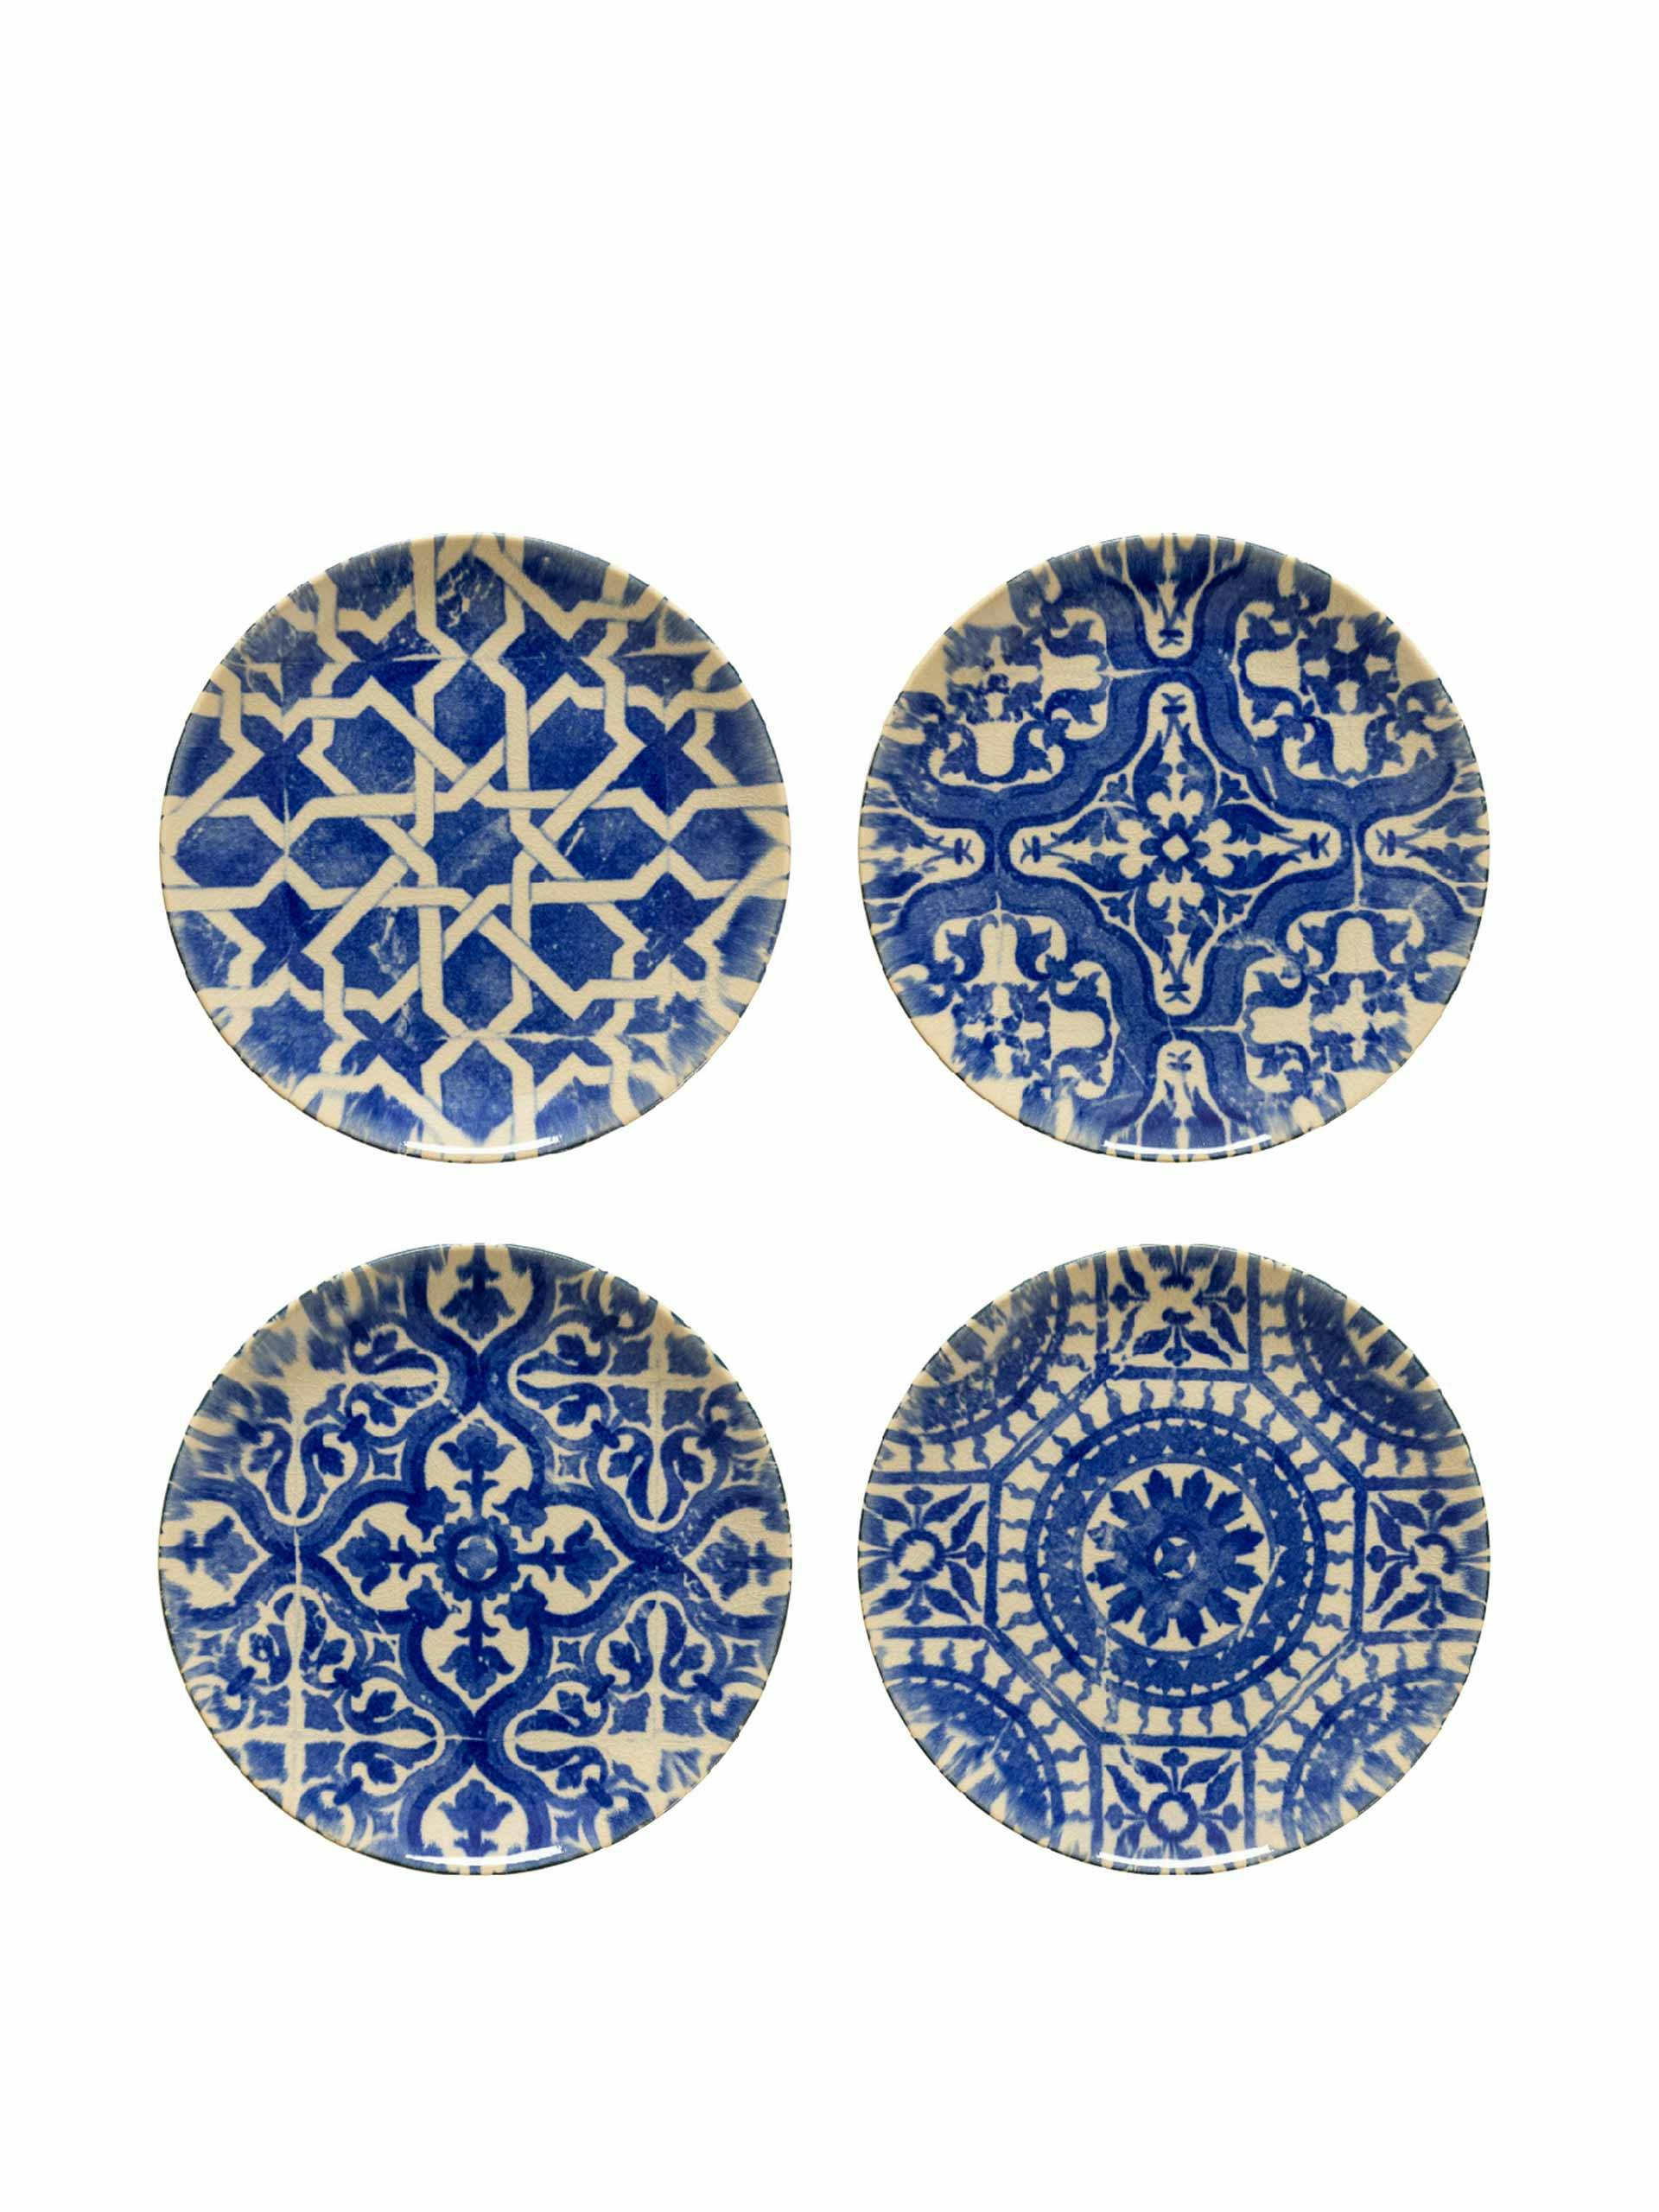 Algarve plates (set of 4)